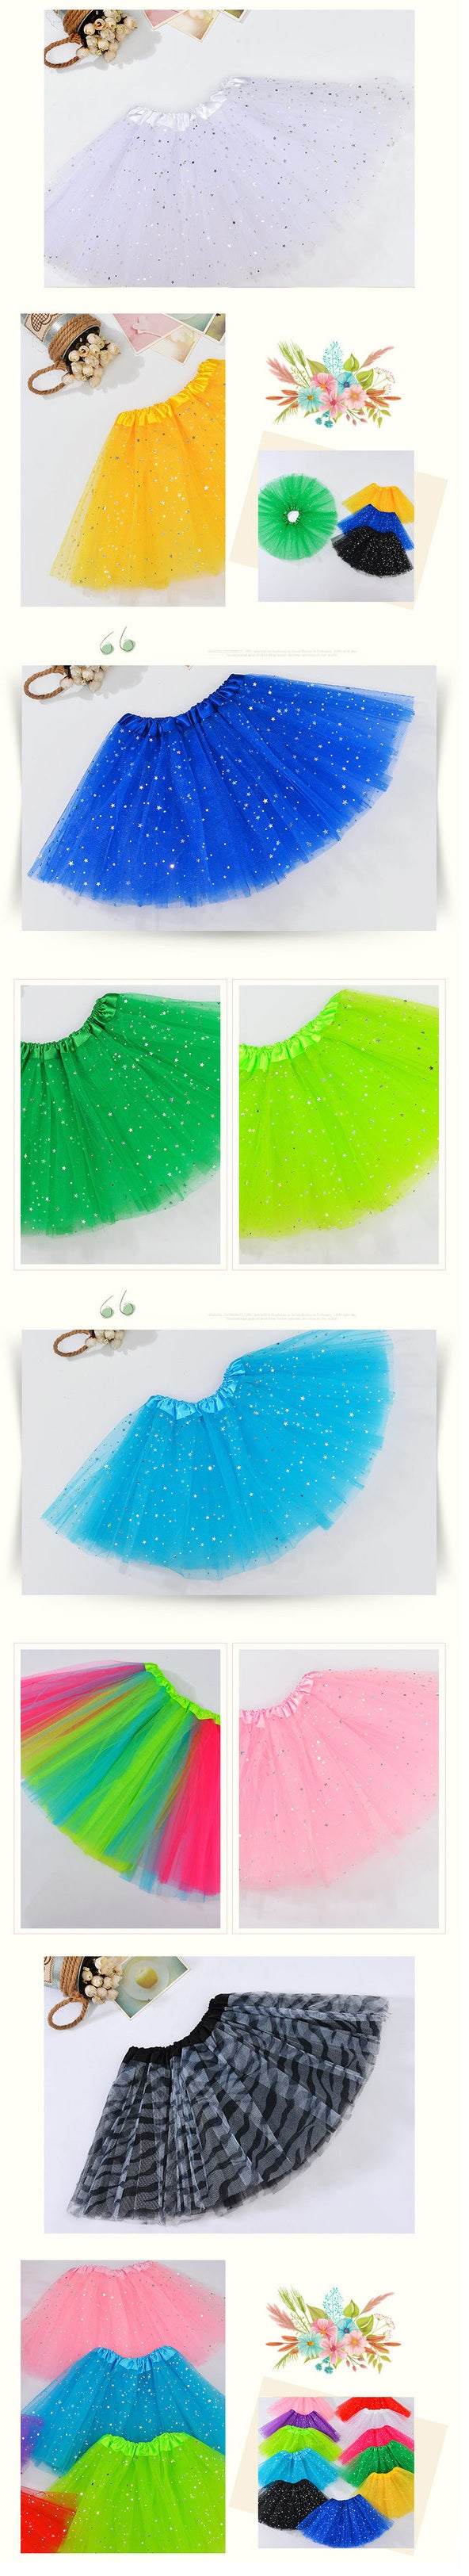 Sequin Tulle Tutu Skirt Ballet Kids Princess Dressup Party Baby Girls Dance Wear, Aqua, Kids